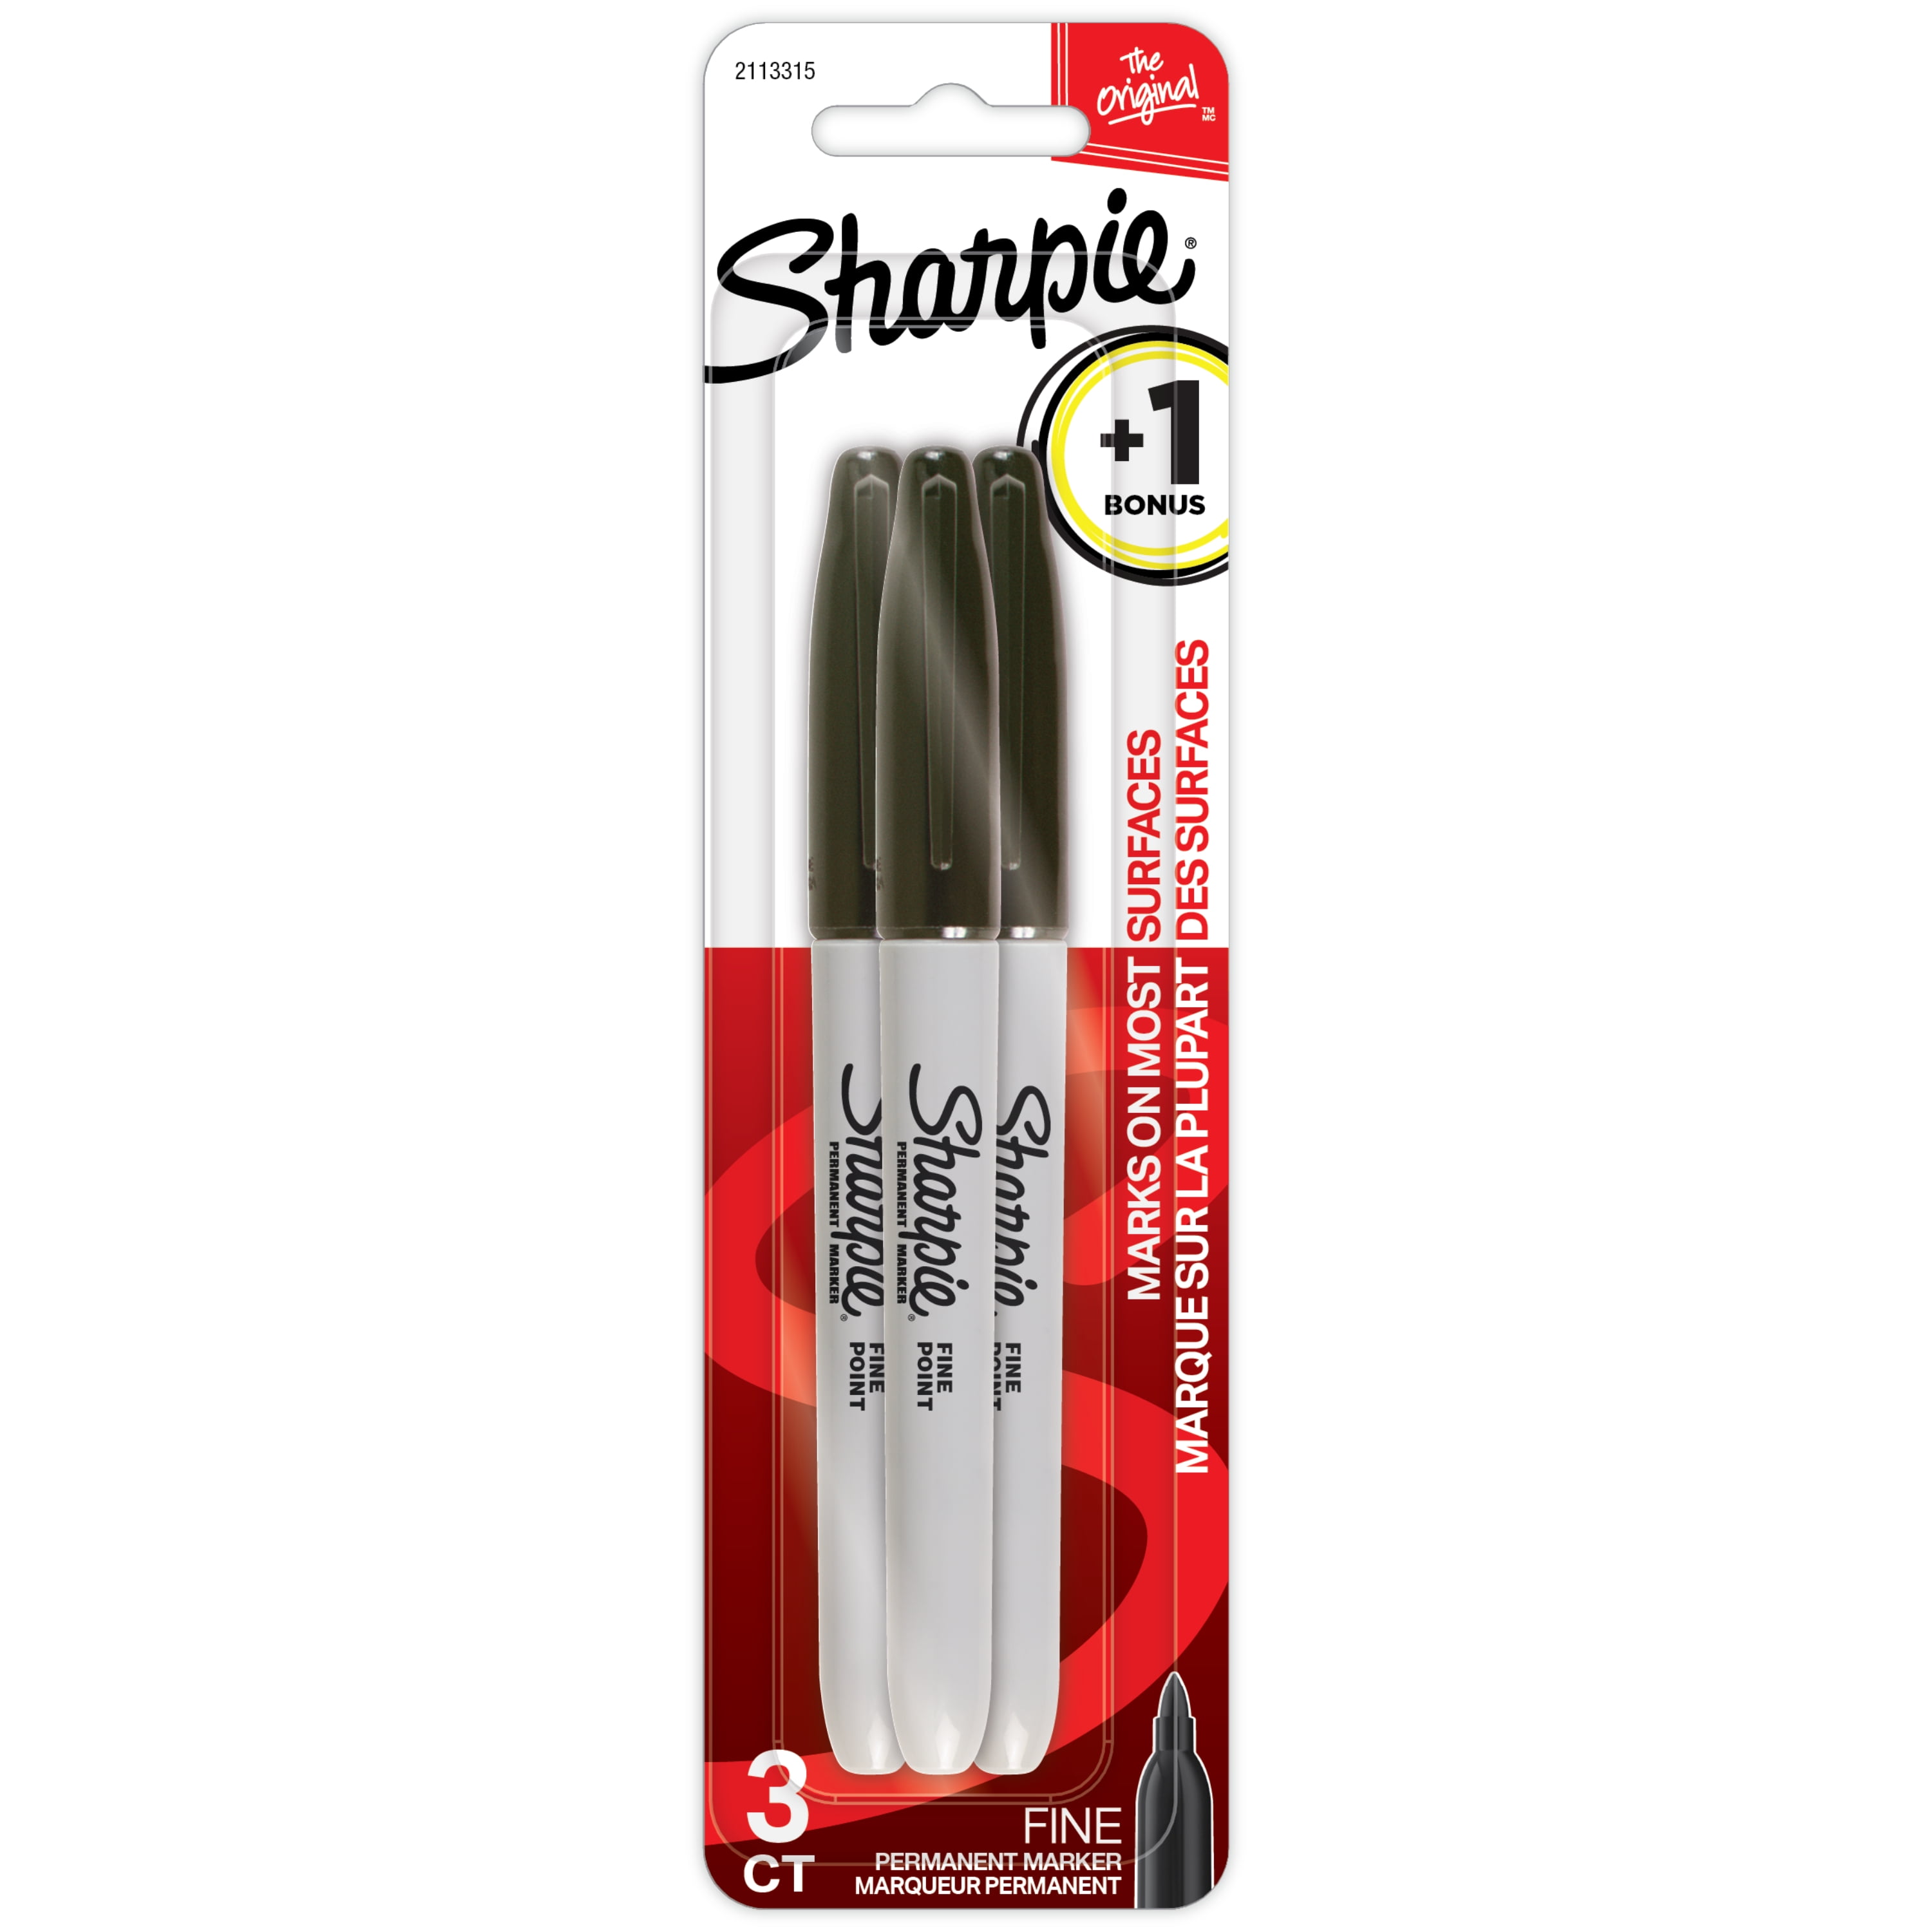 Sharpie Permanent Markers, Fine Point, Black, 2+1 Bonus